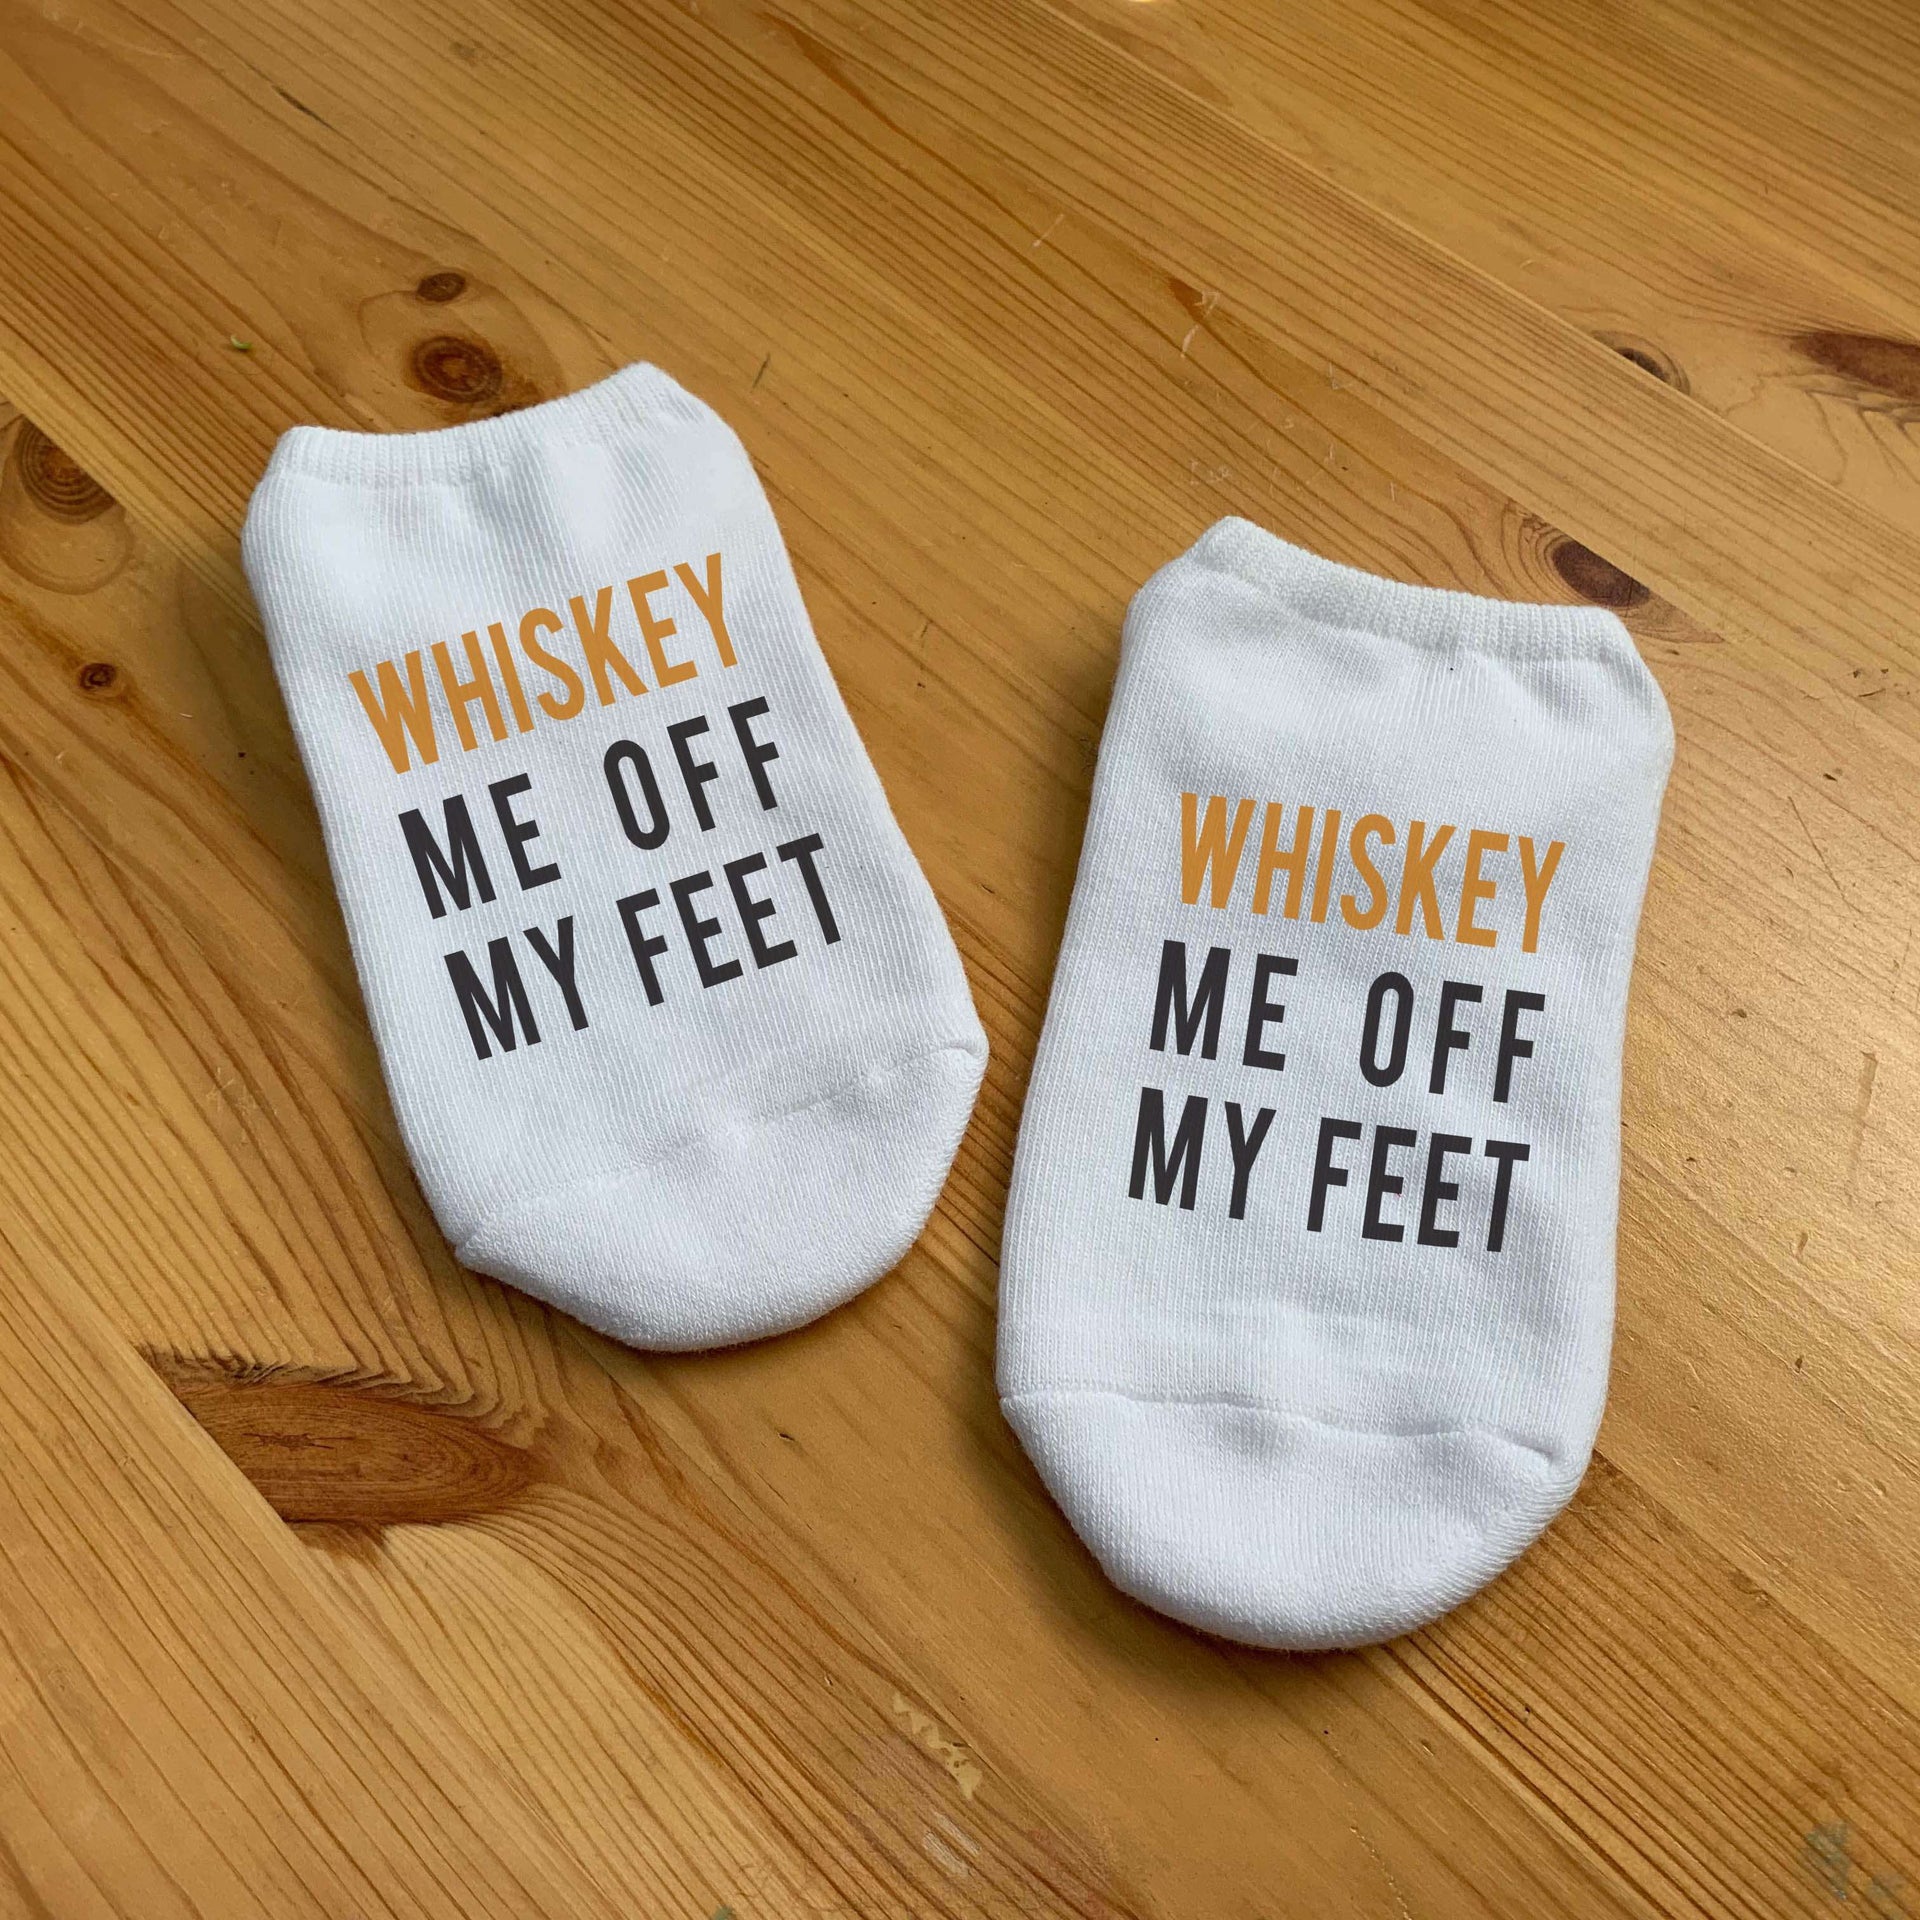 Whiskey off my feet custom printed on no show socks.